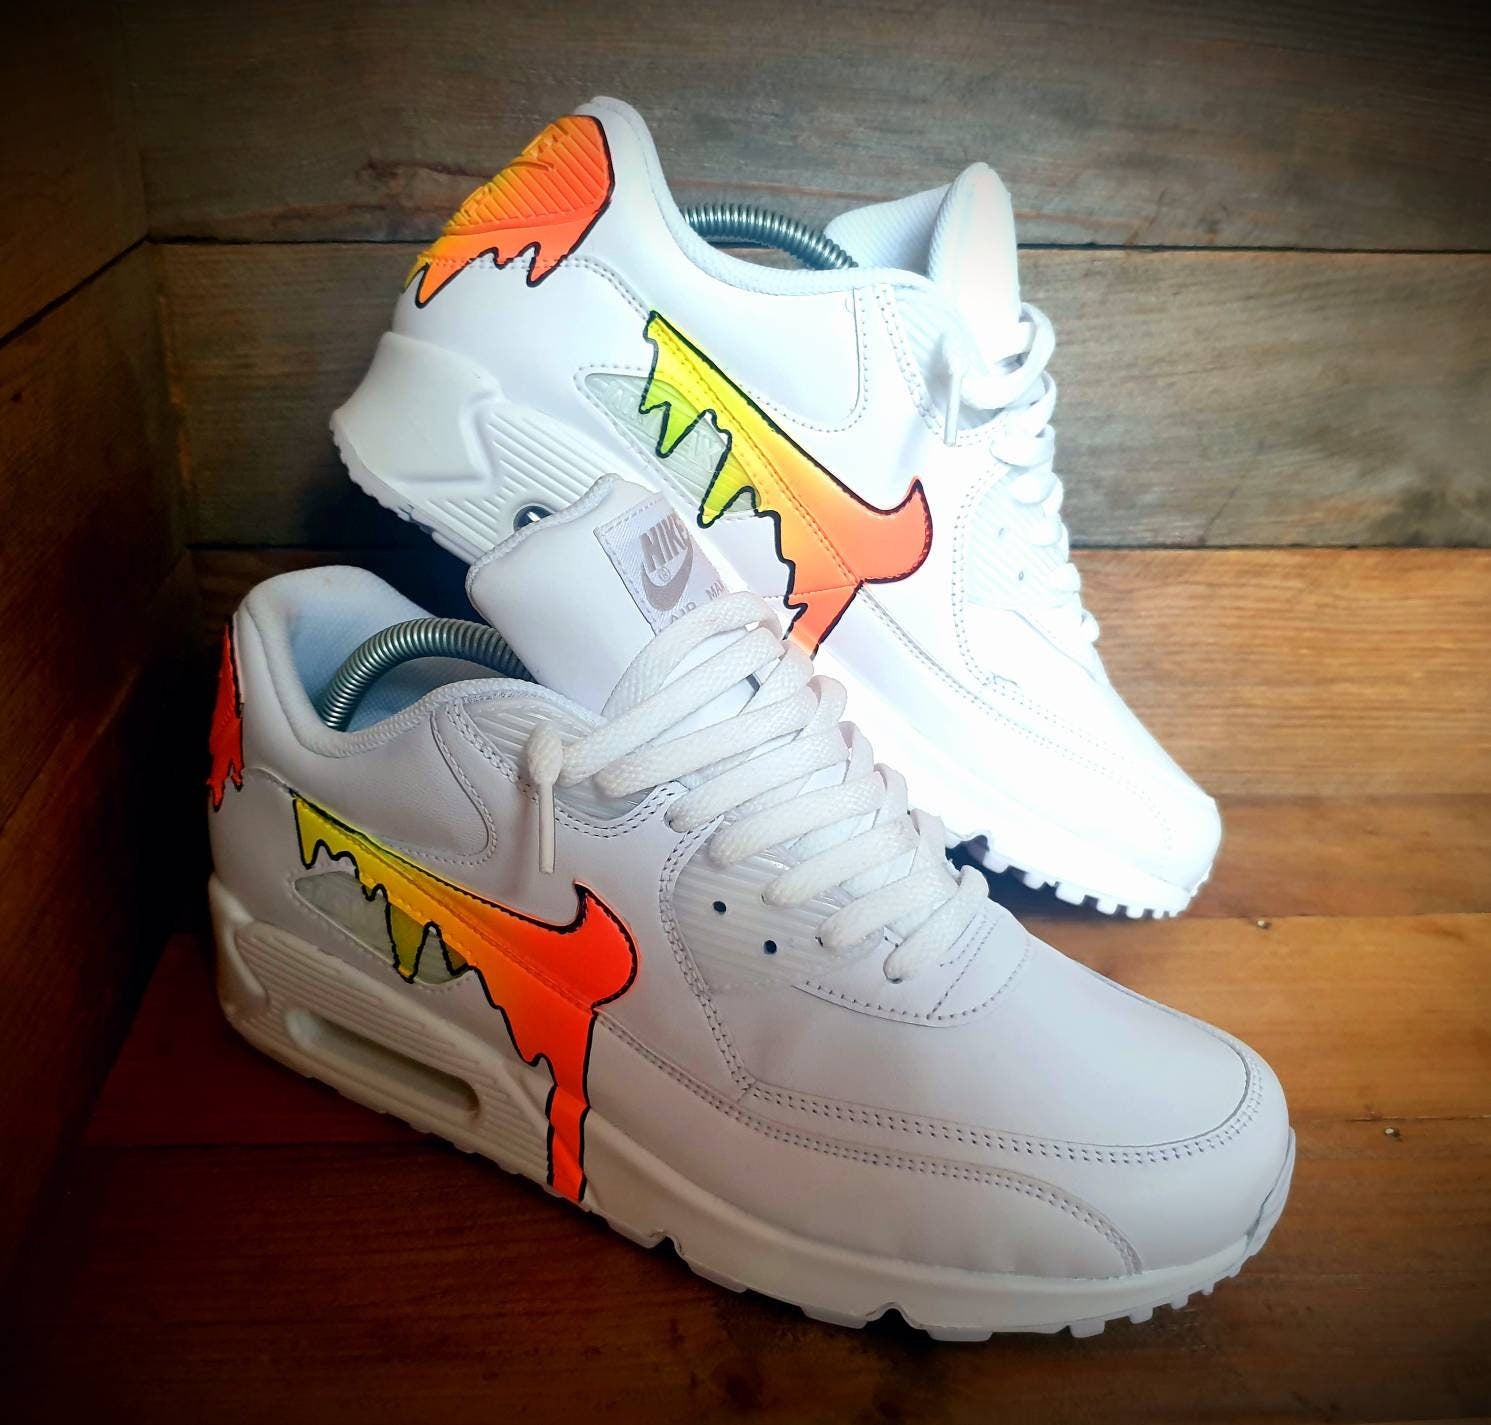 Custom Painted Air Max 90/Sneakers/Shoes/Kicks/Premium/Personalised/Neon Orange Drip